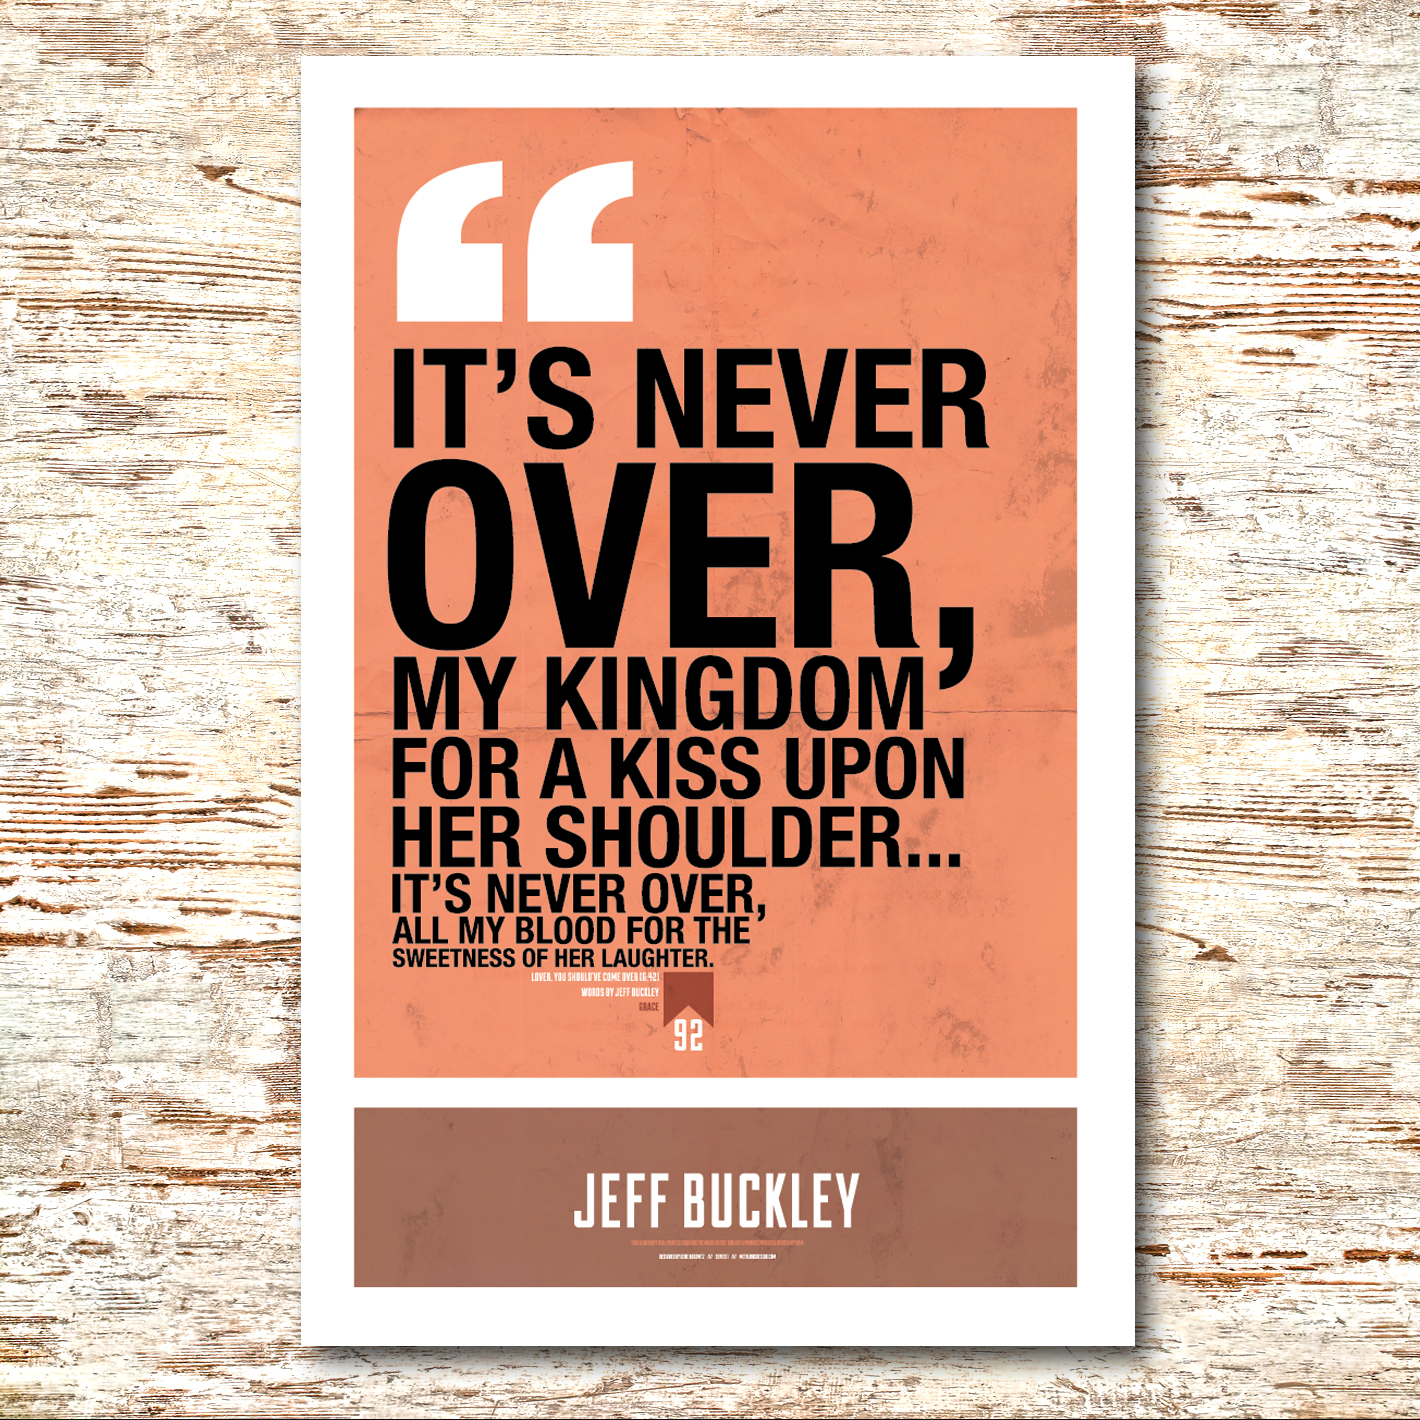 Jeff Buckley — The Salt & Sea